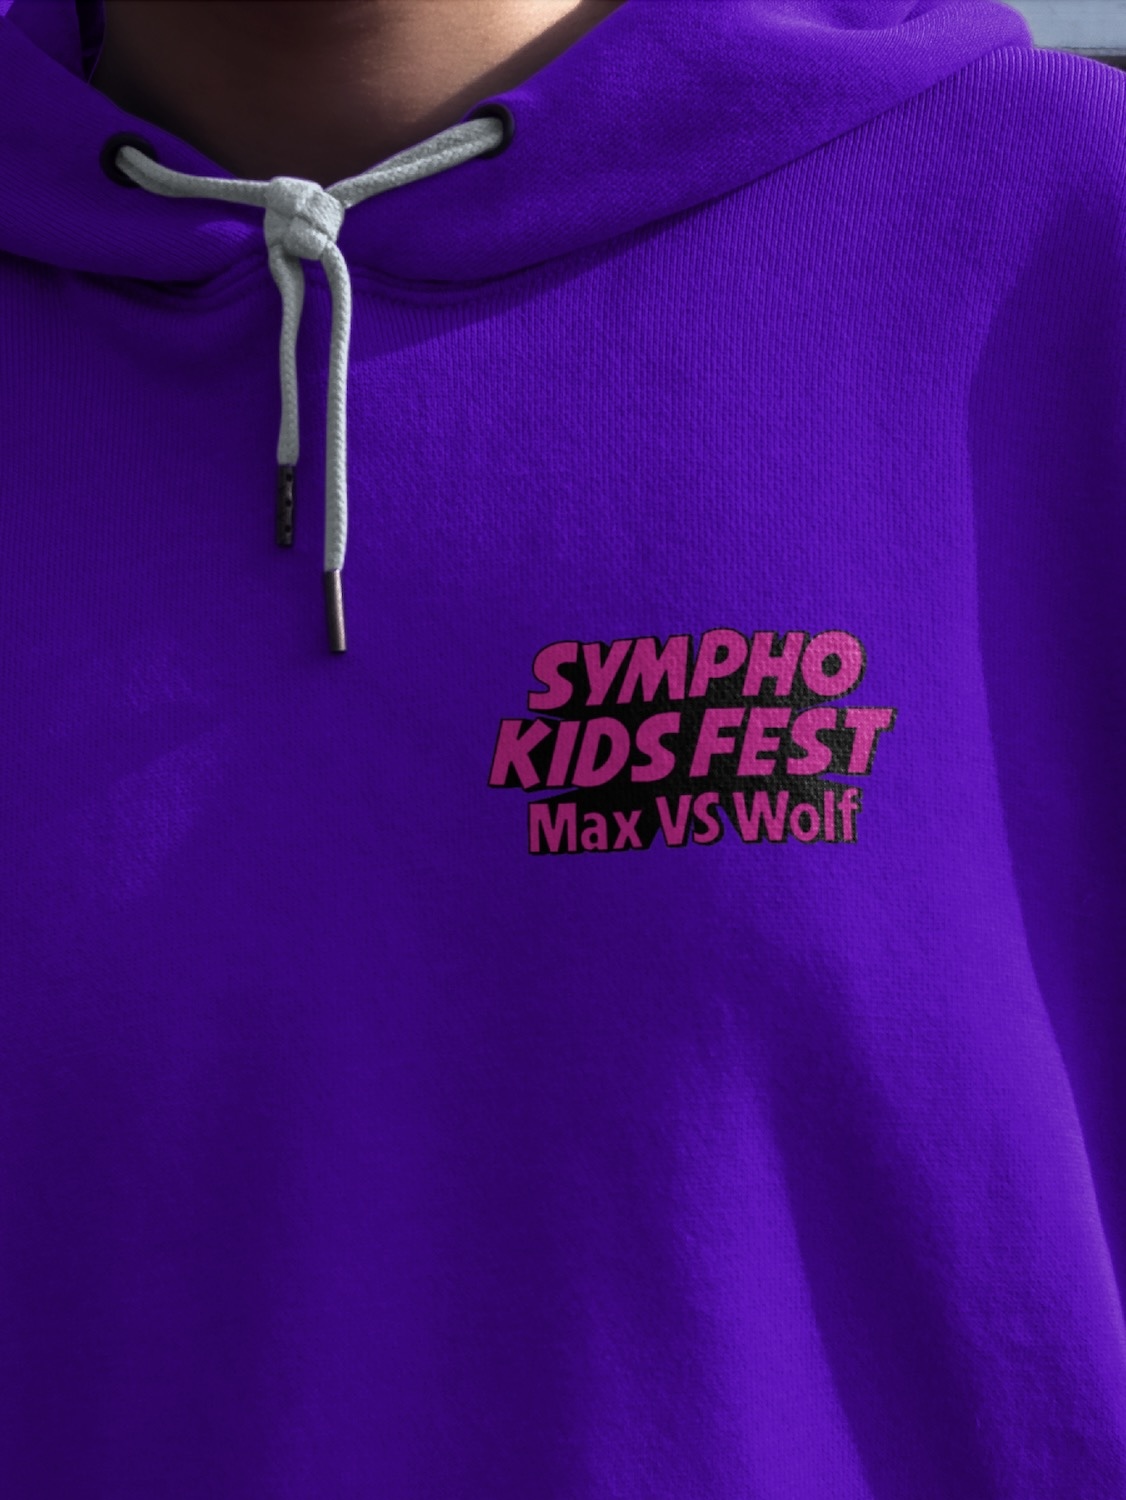 Sympho Kids Fest